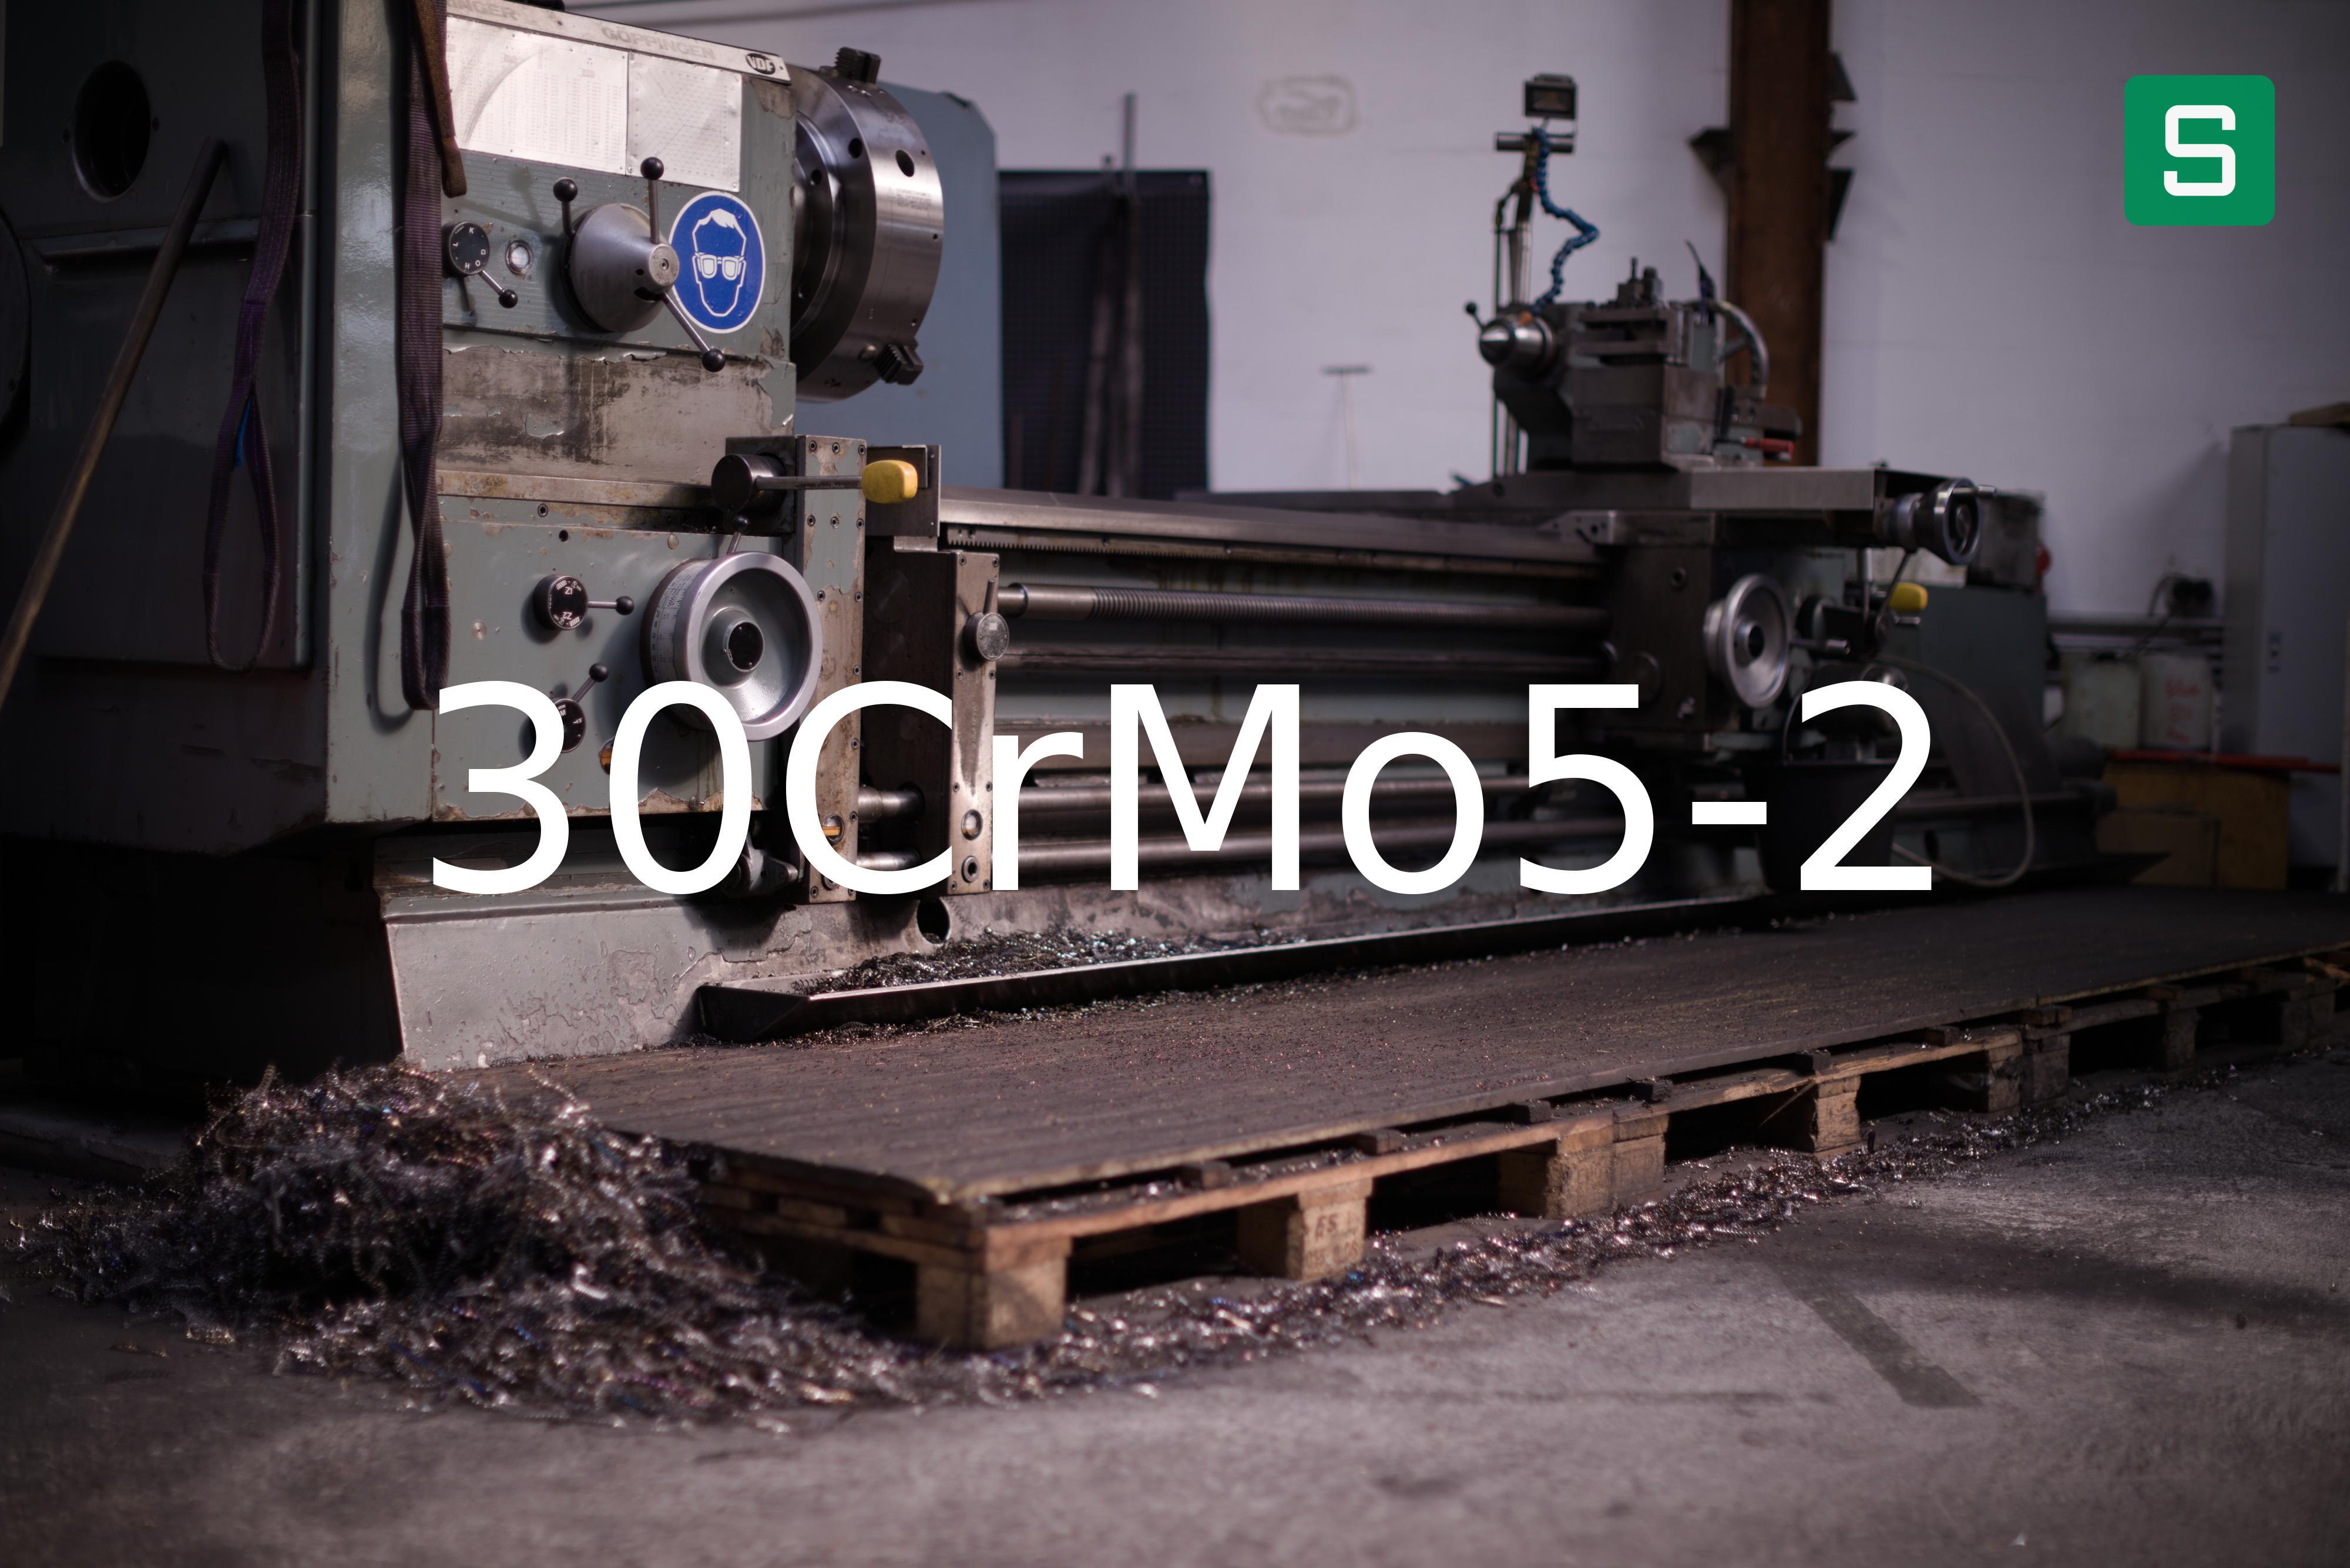 Steel Material: 30CrMo5-2